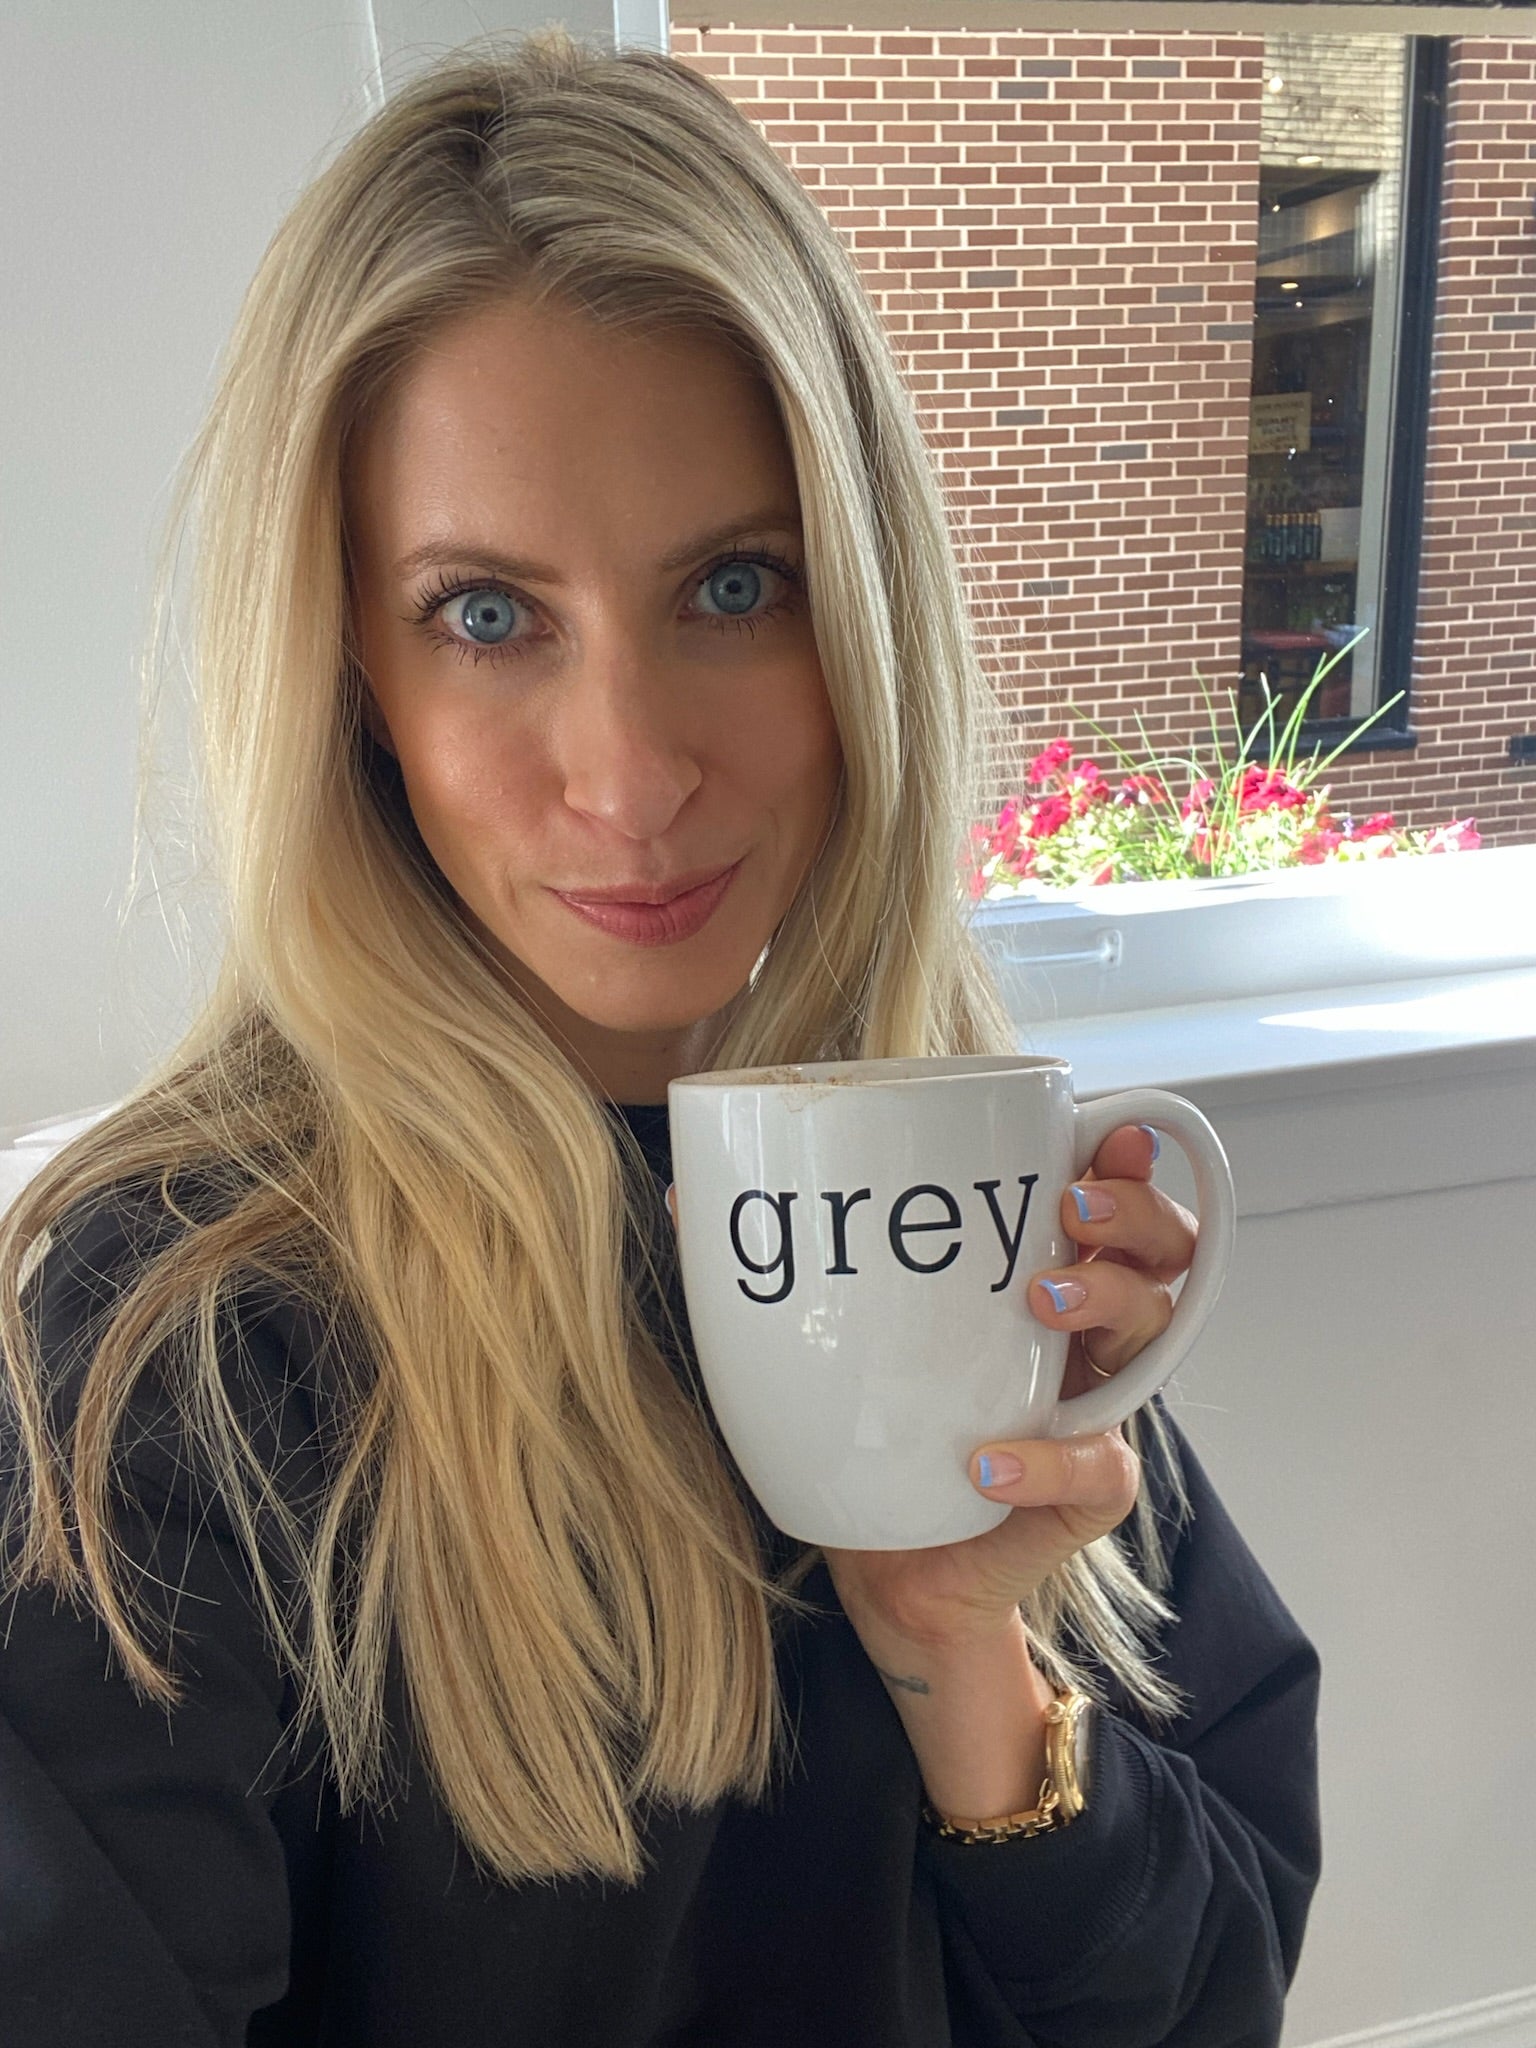 Grey Coffee Mug